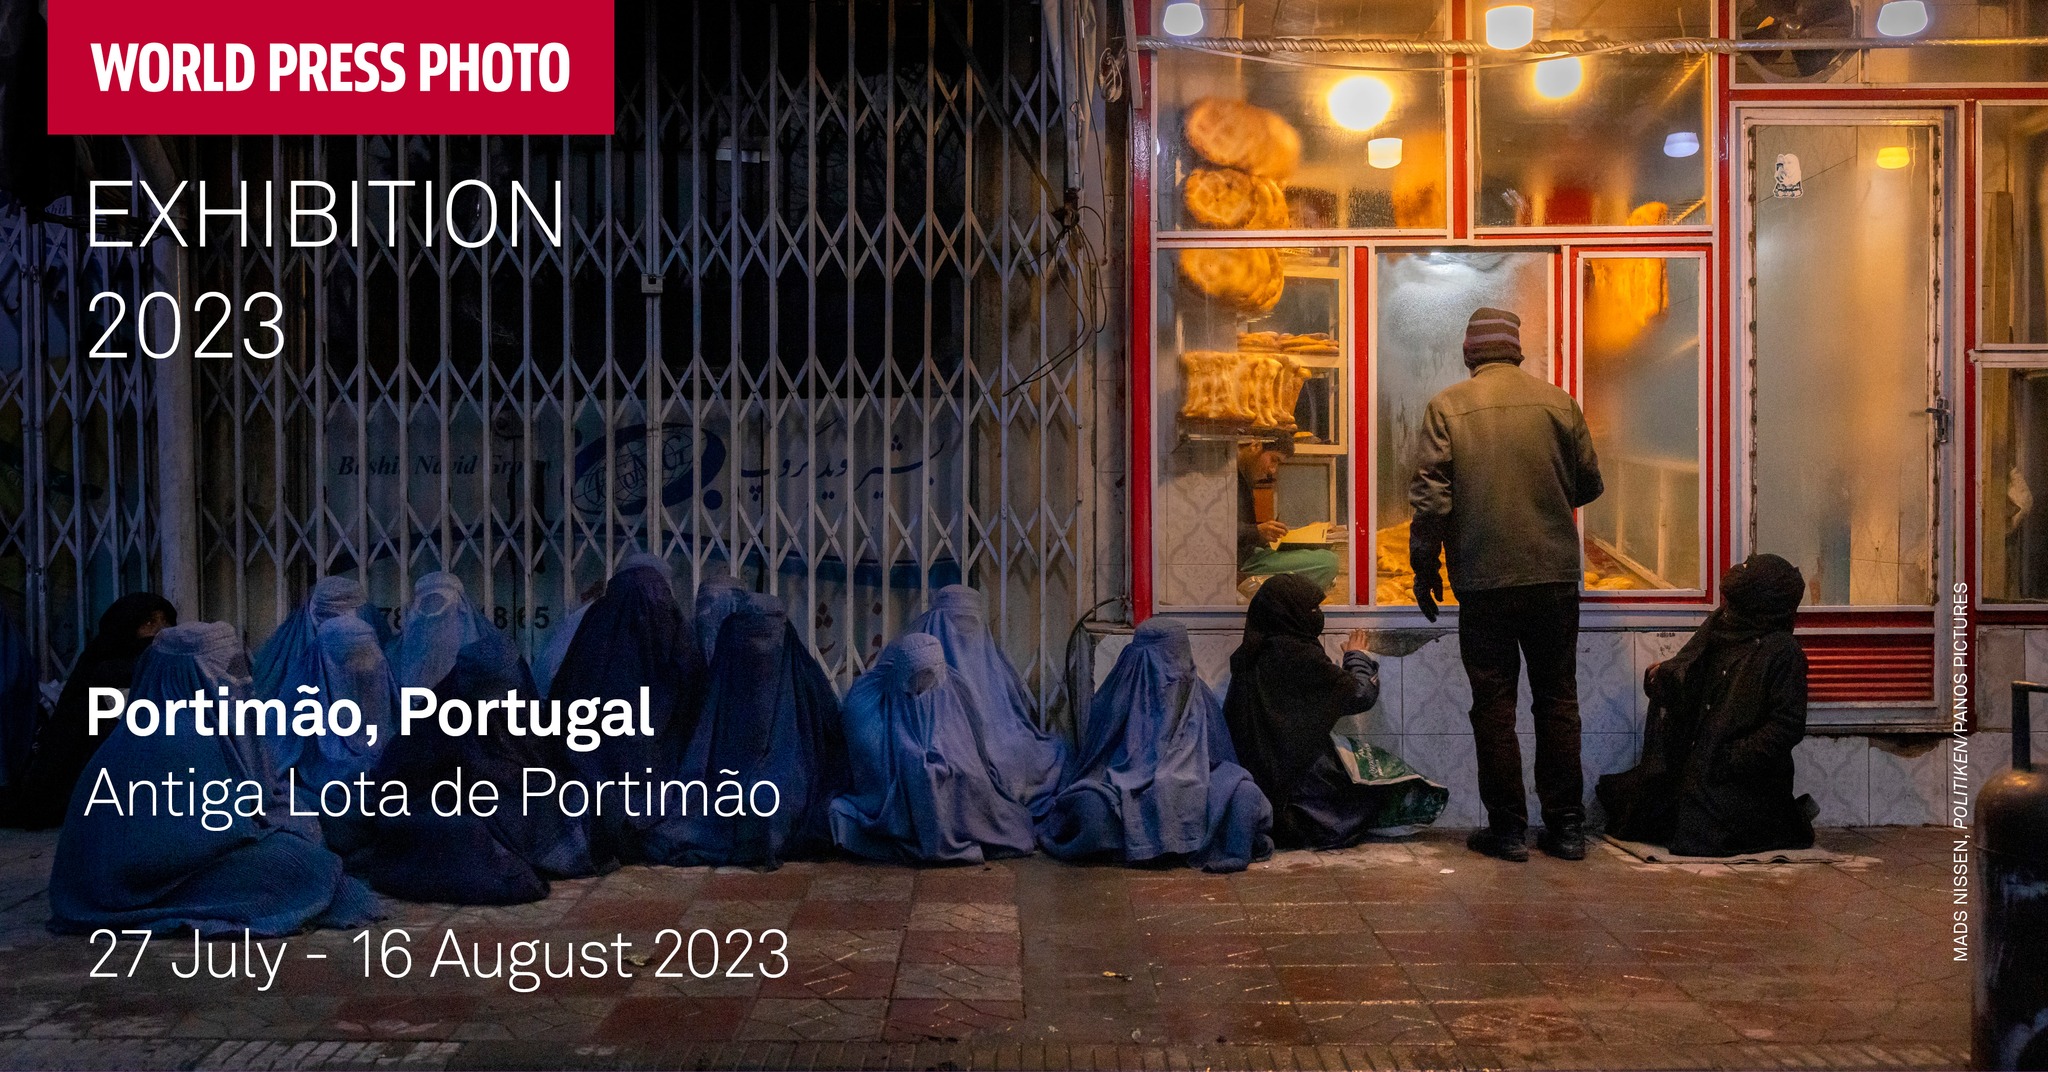 World Press Photo Exhibition 2023: Portimão, Portugal